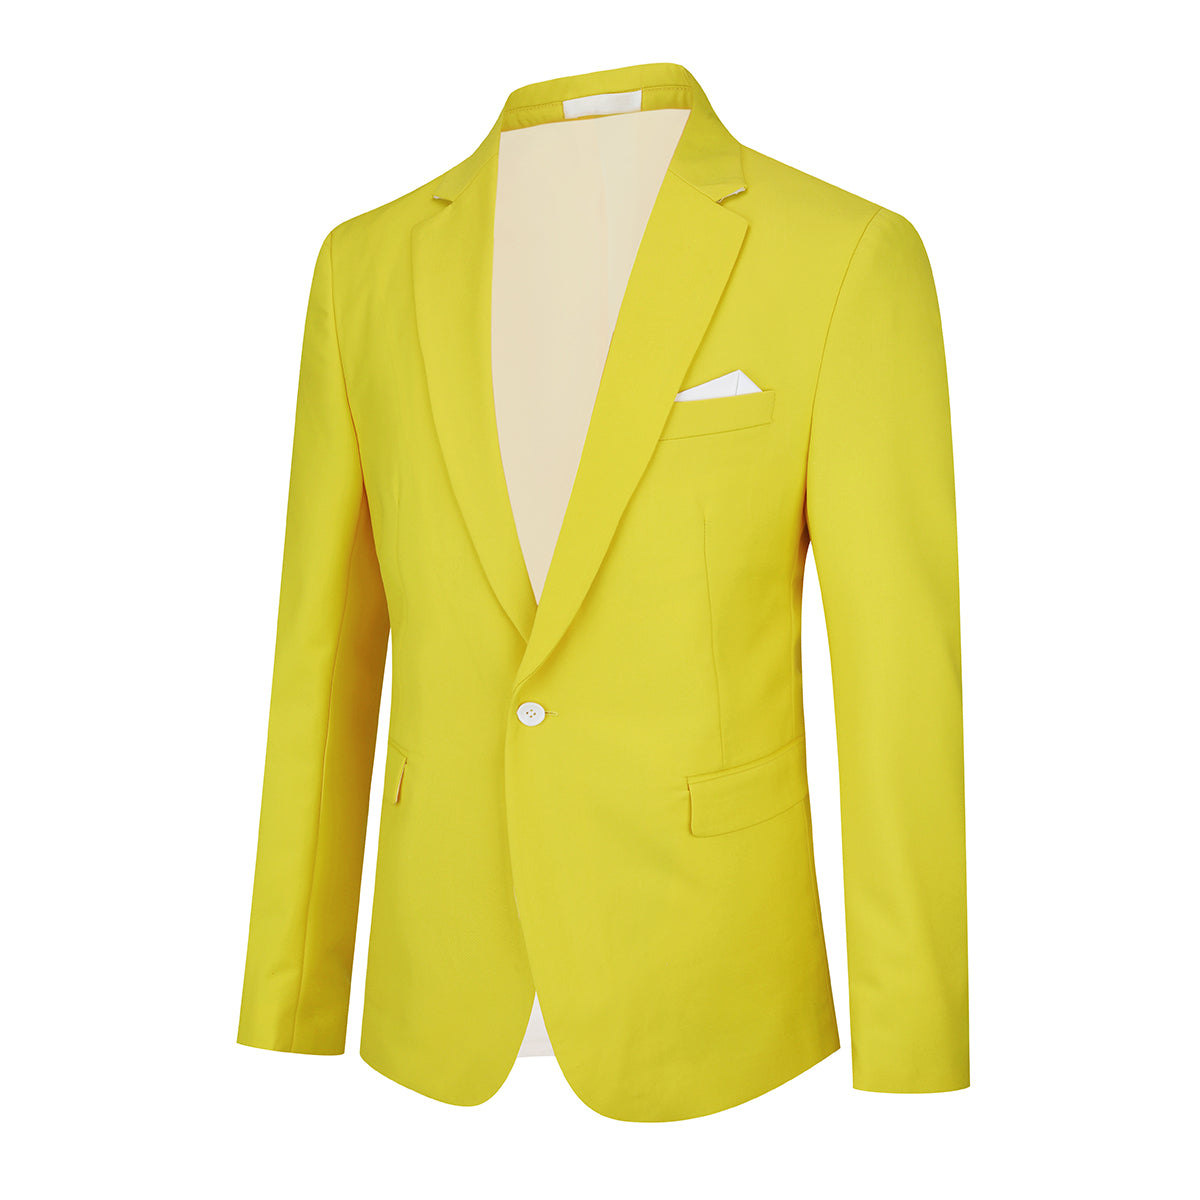 Fashion Jakcket One Button Casual Blazer Yellow